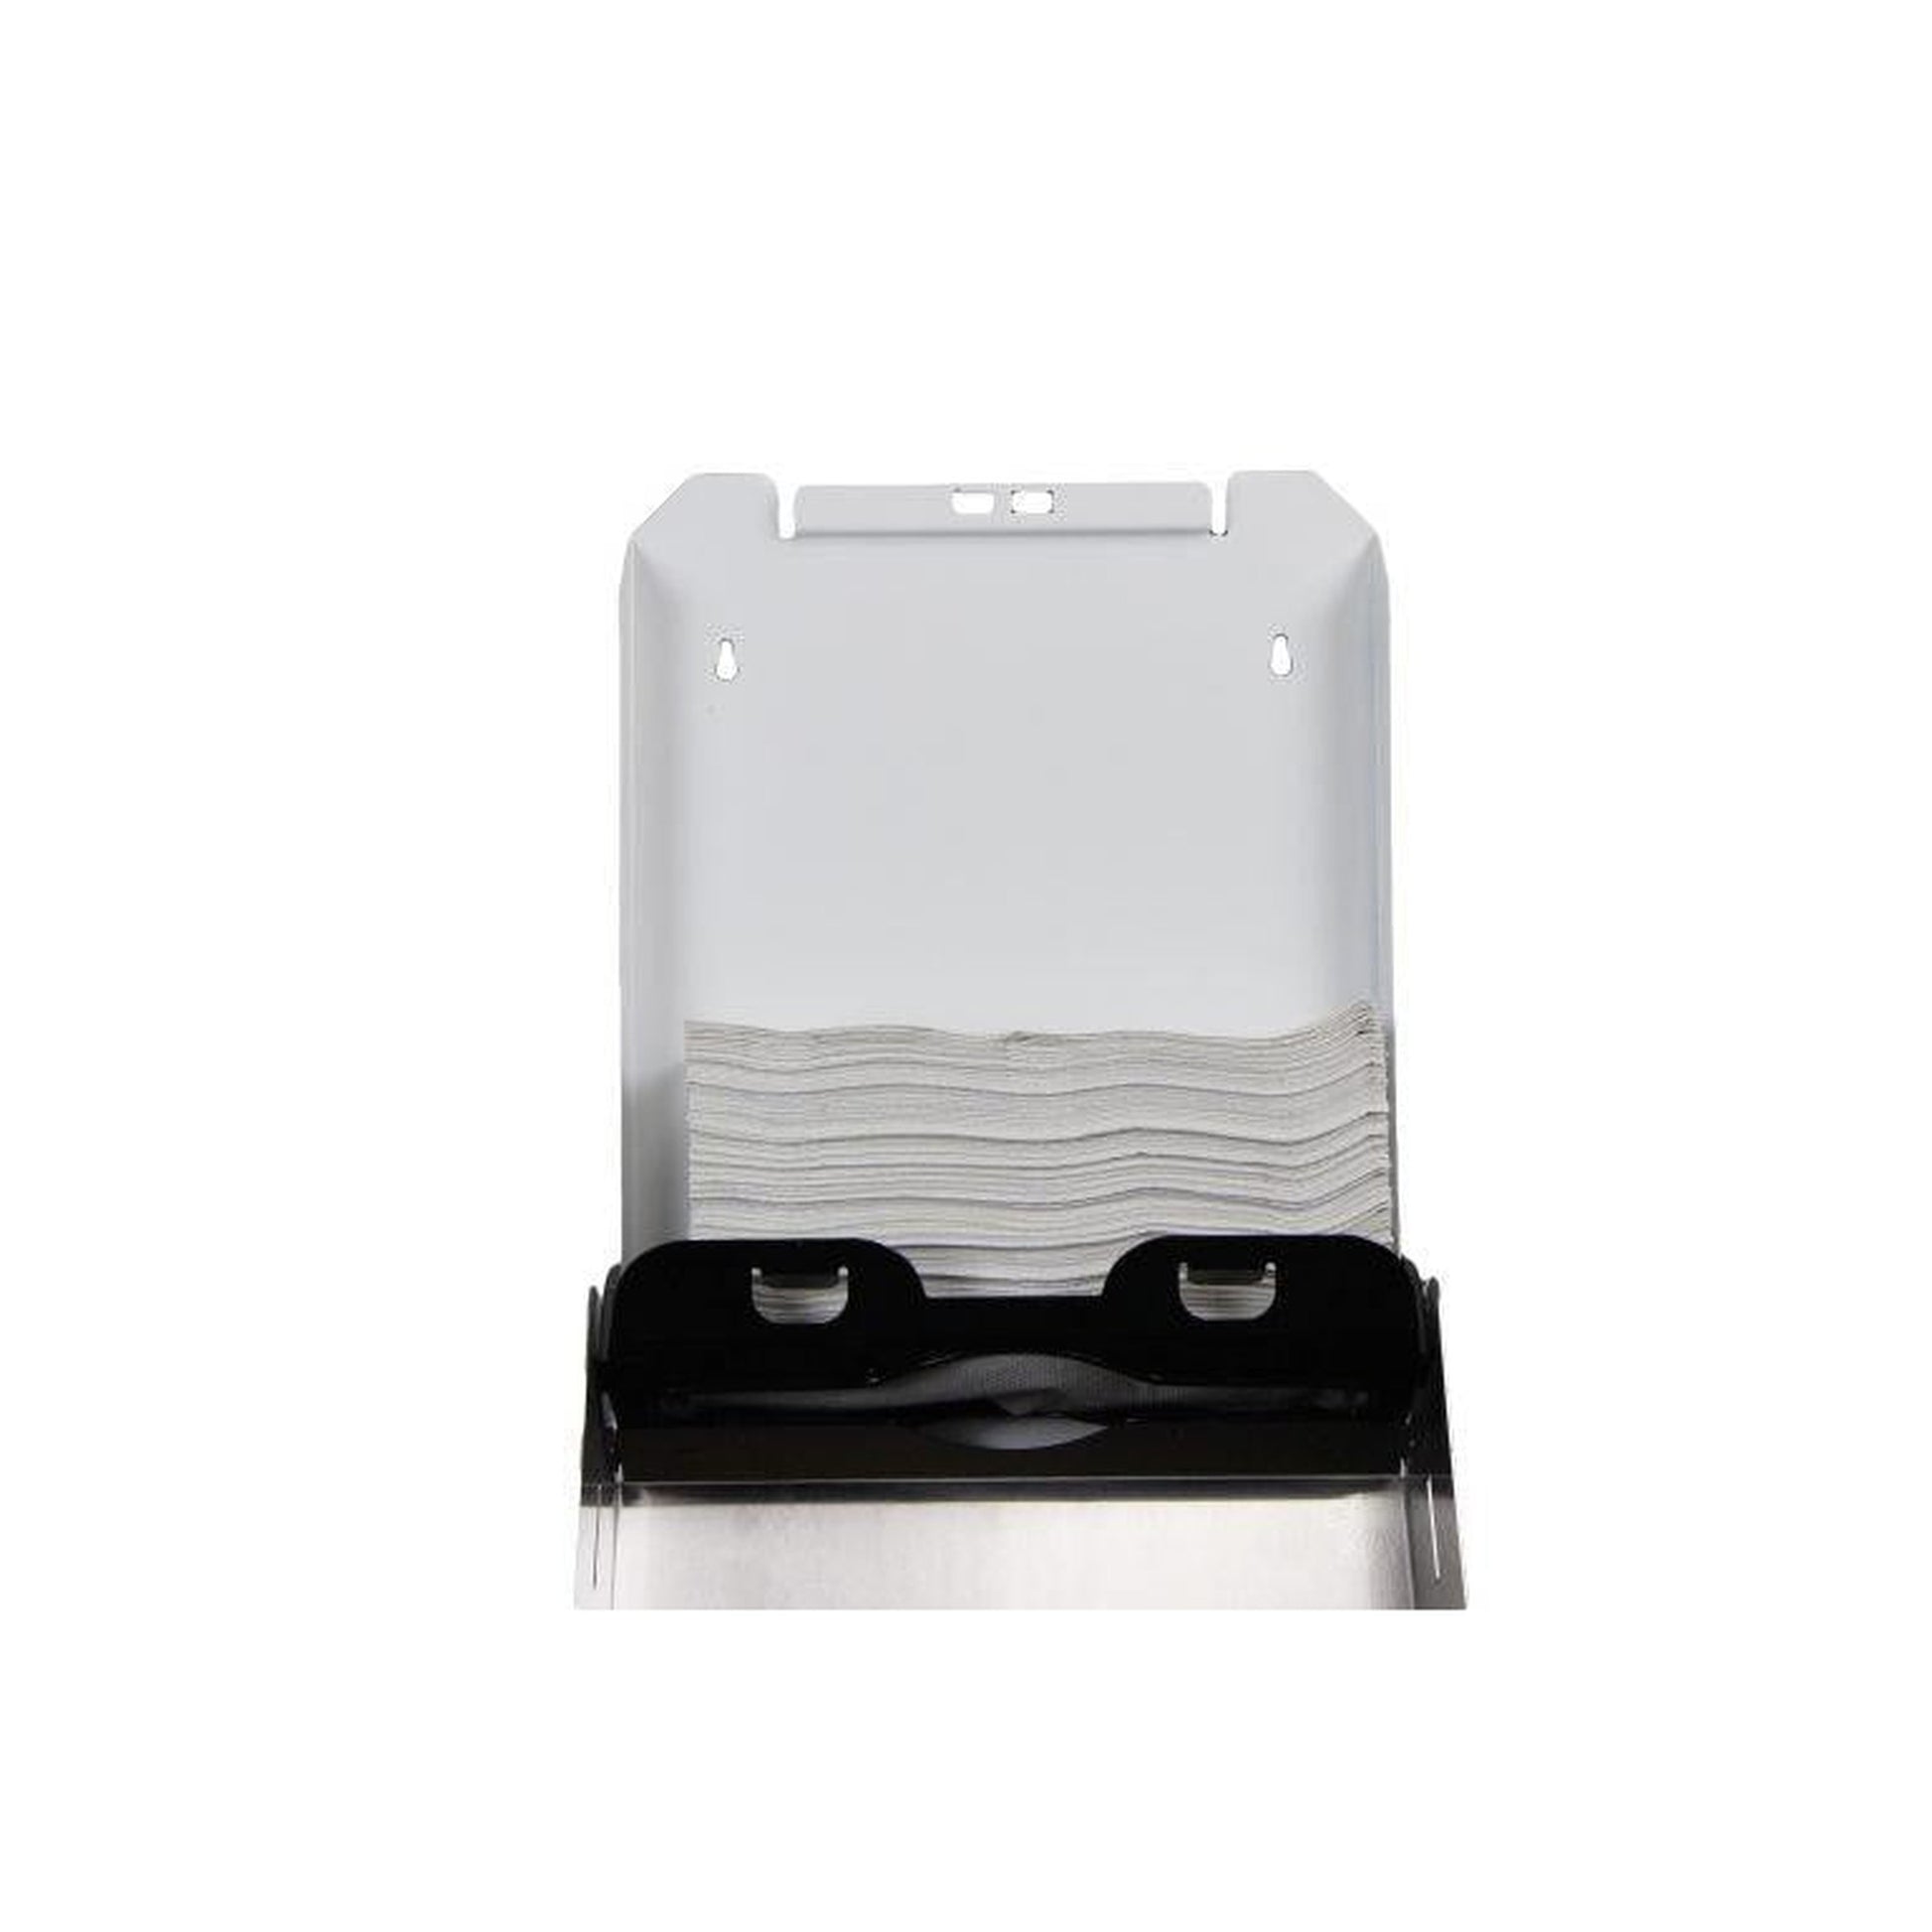 Frost 11 x 13.4 x 4.1 White Epoxy Powder Paper Product Dispenser